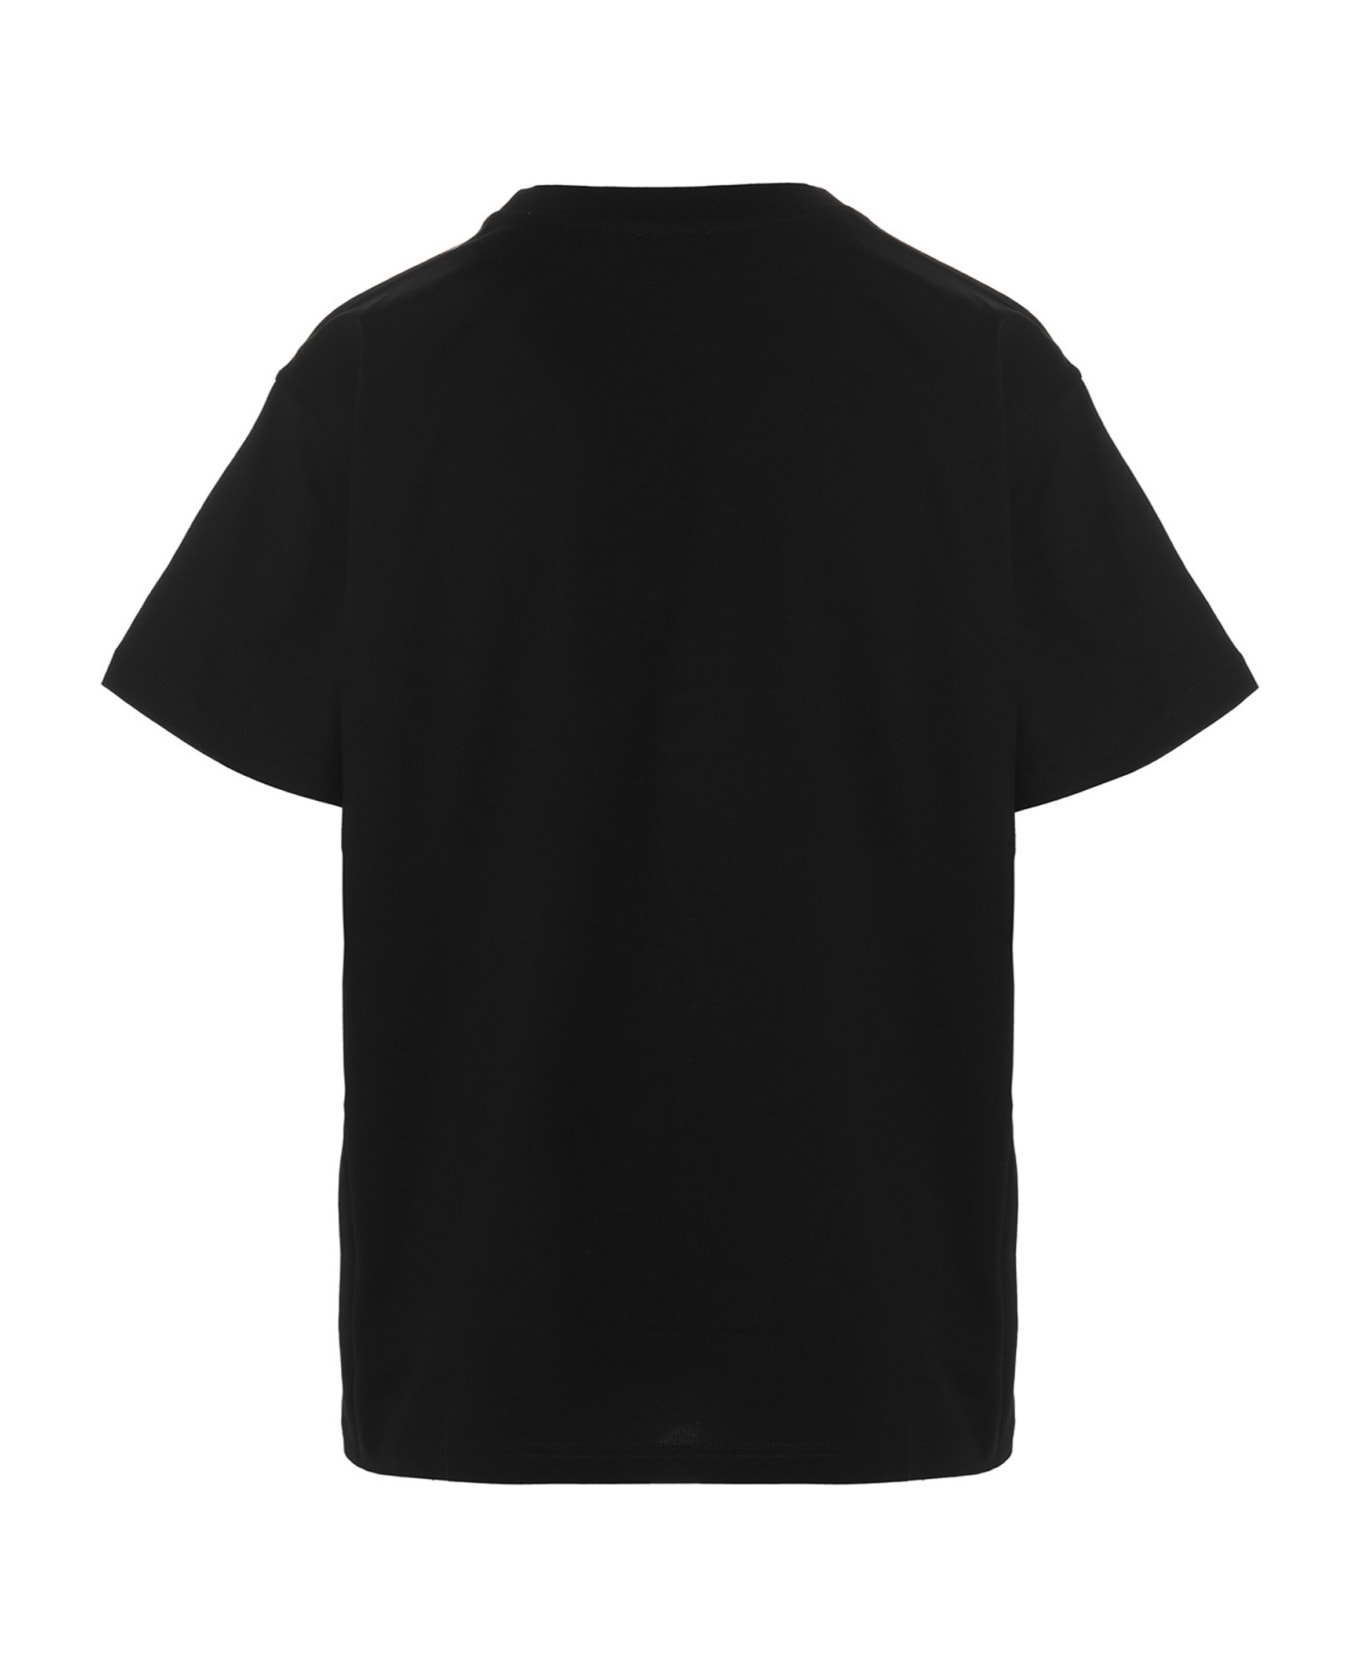 Burberry T-shirt 'carrick Star' - Black  